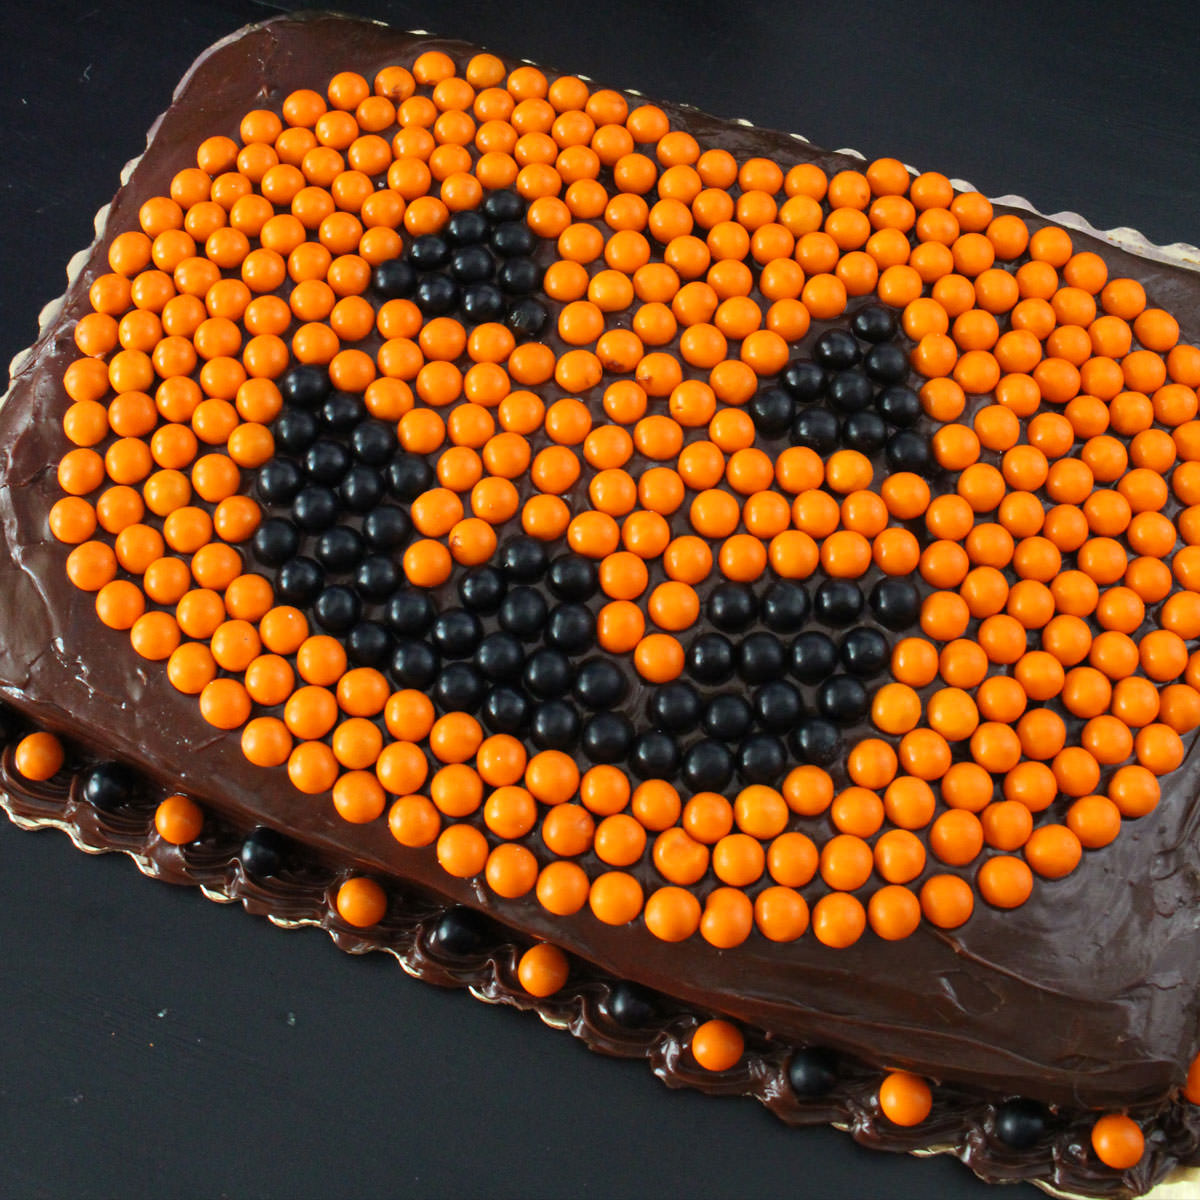 Halloween scary pumpkin cake | Pumpkin carving, Scary pumpkin, Pumpkin cake